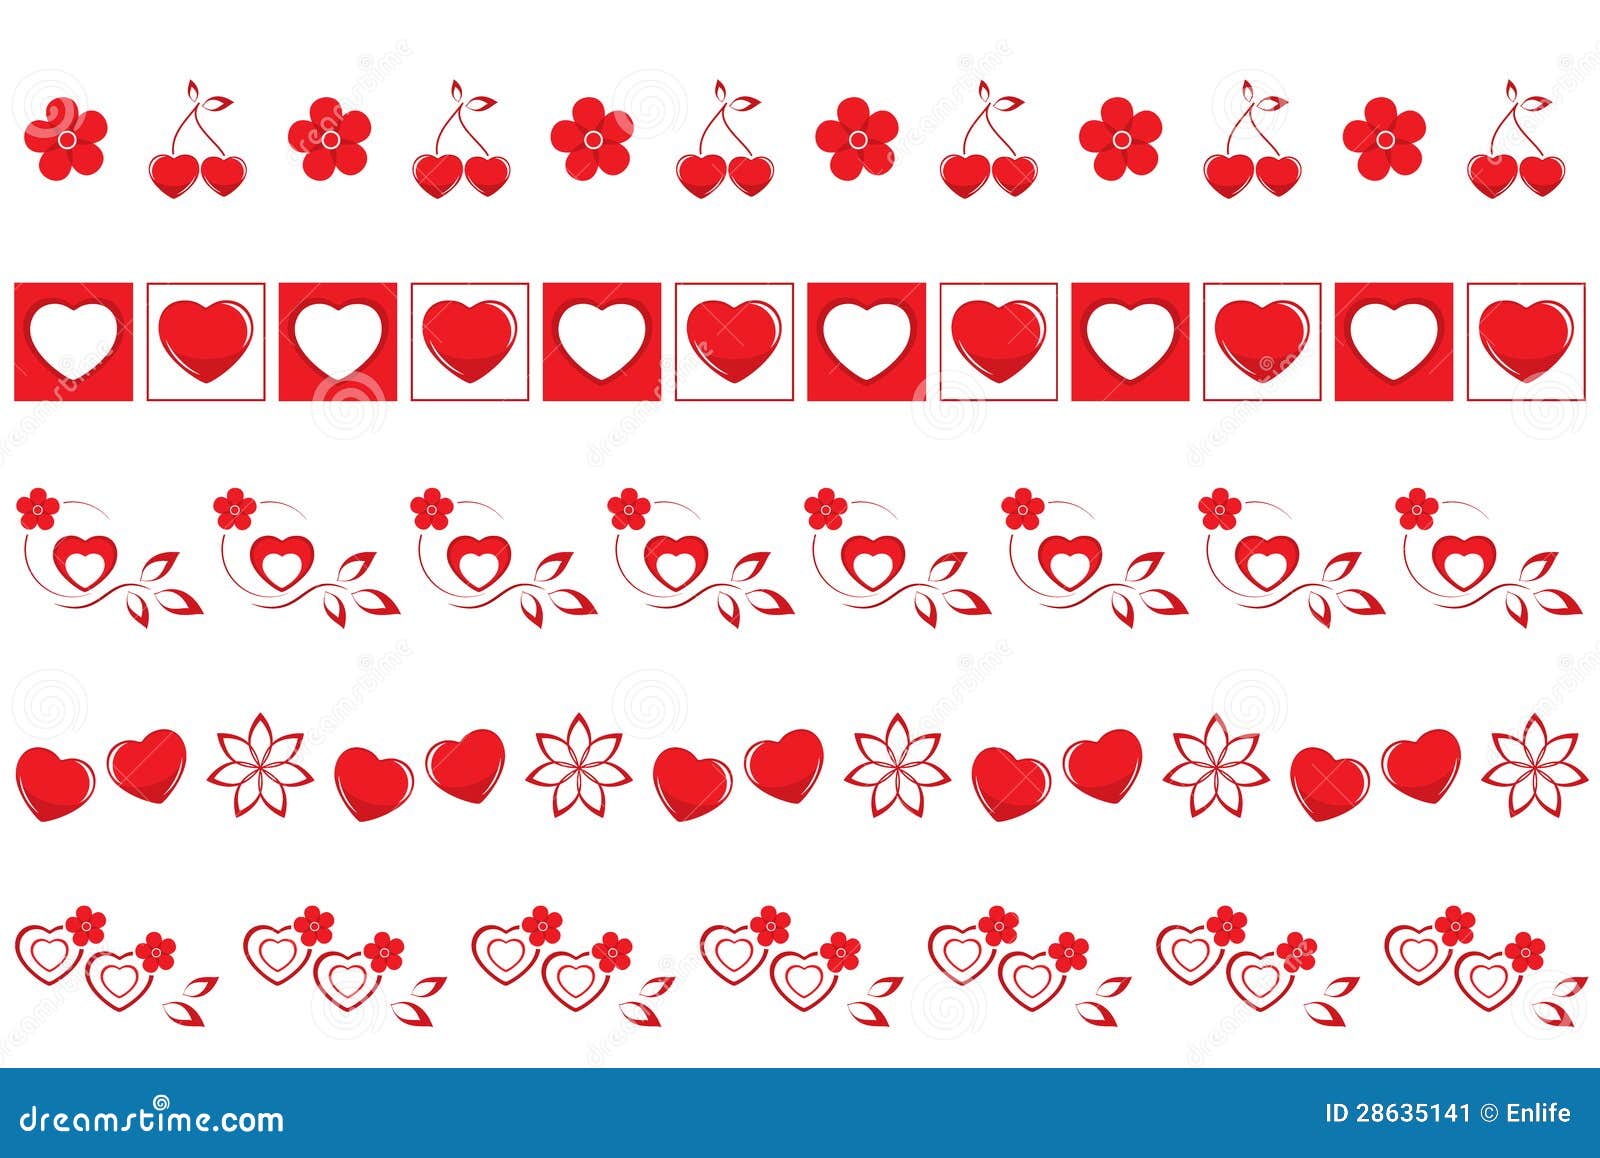 Valentines borders set #2 stock illustration. Illustration of line - 286351411300 x 958